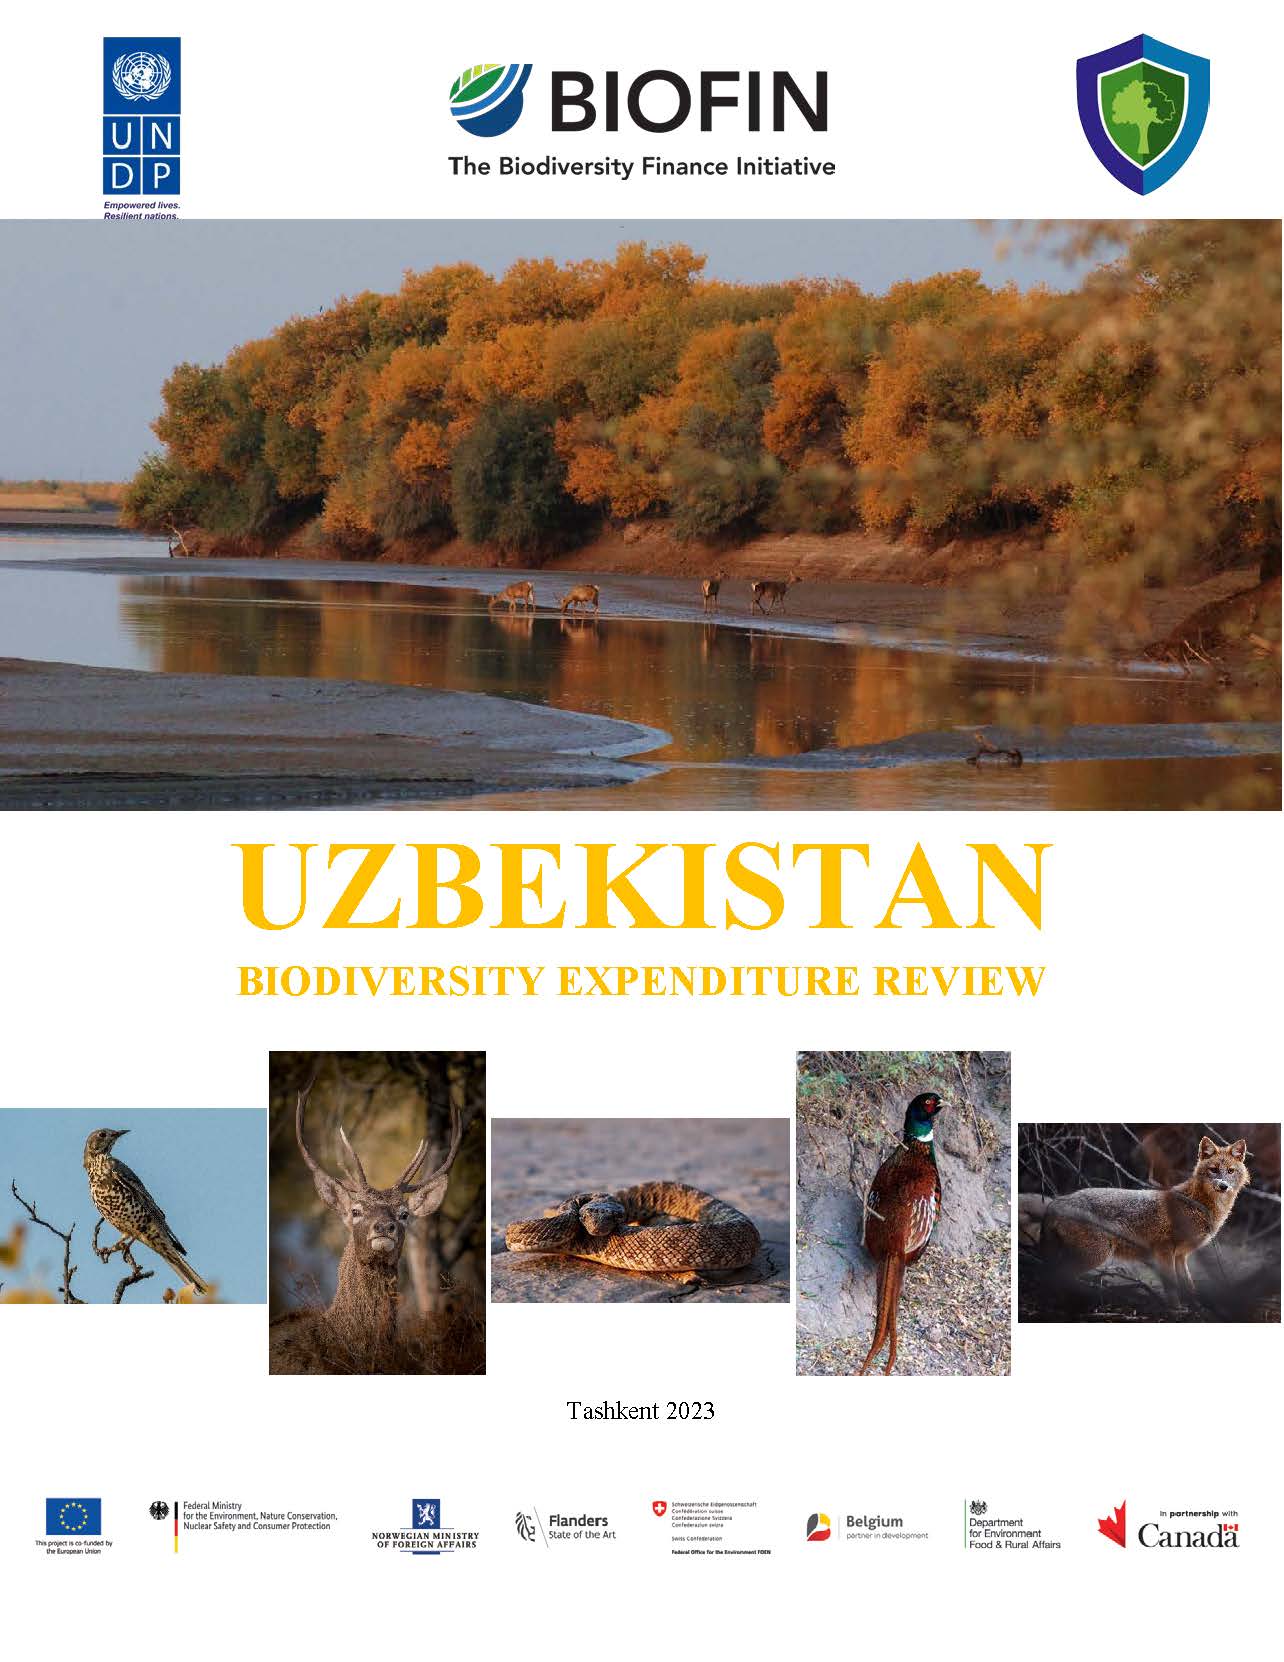 Biodiversity expenditure review in Uzbekistan